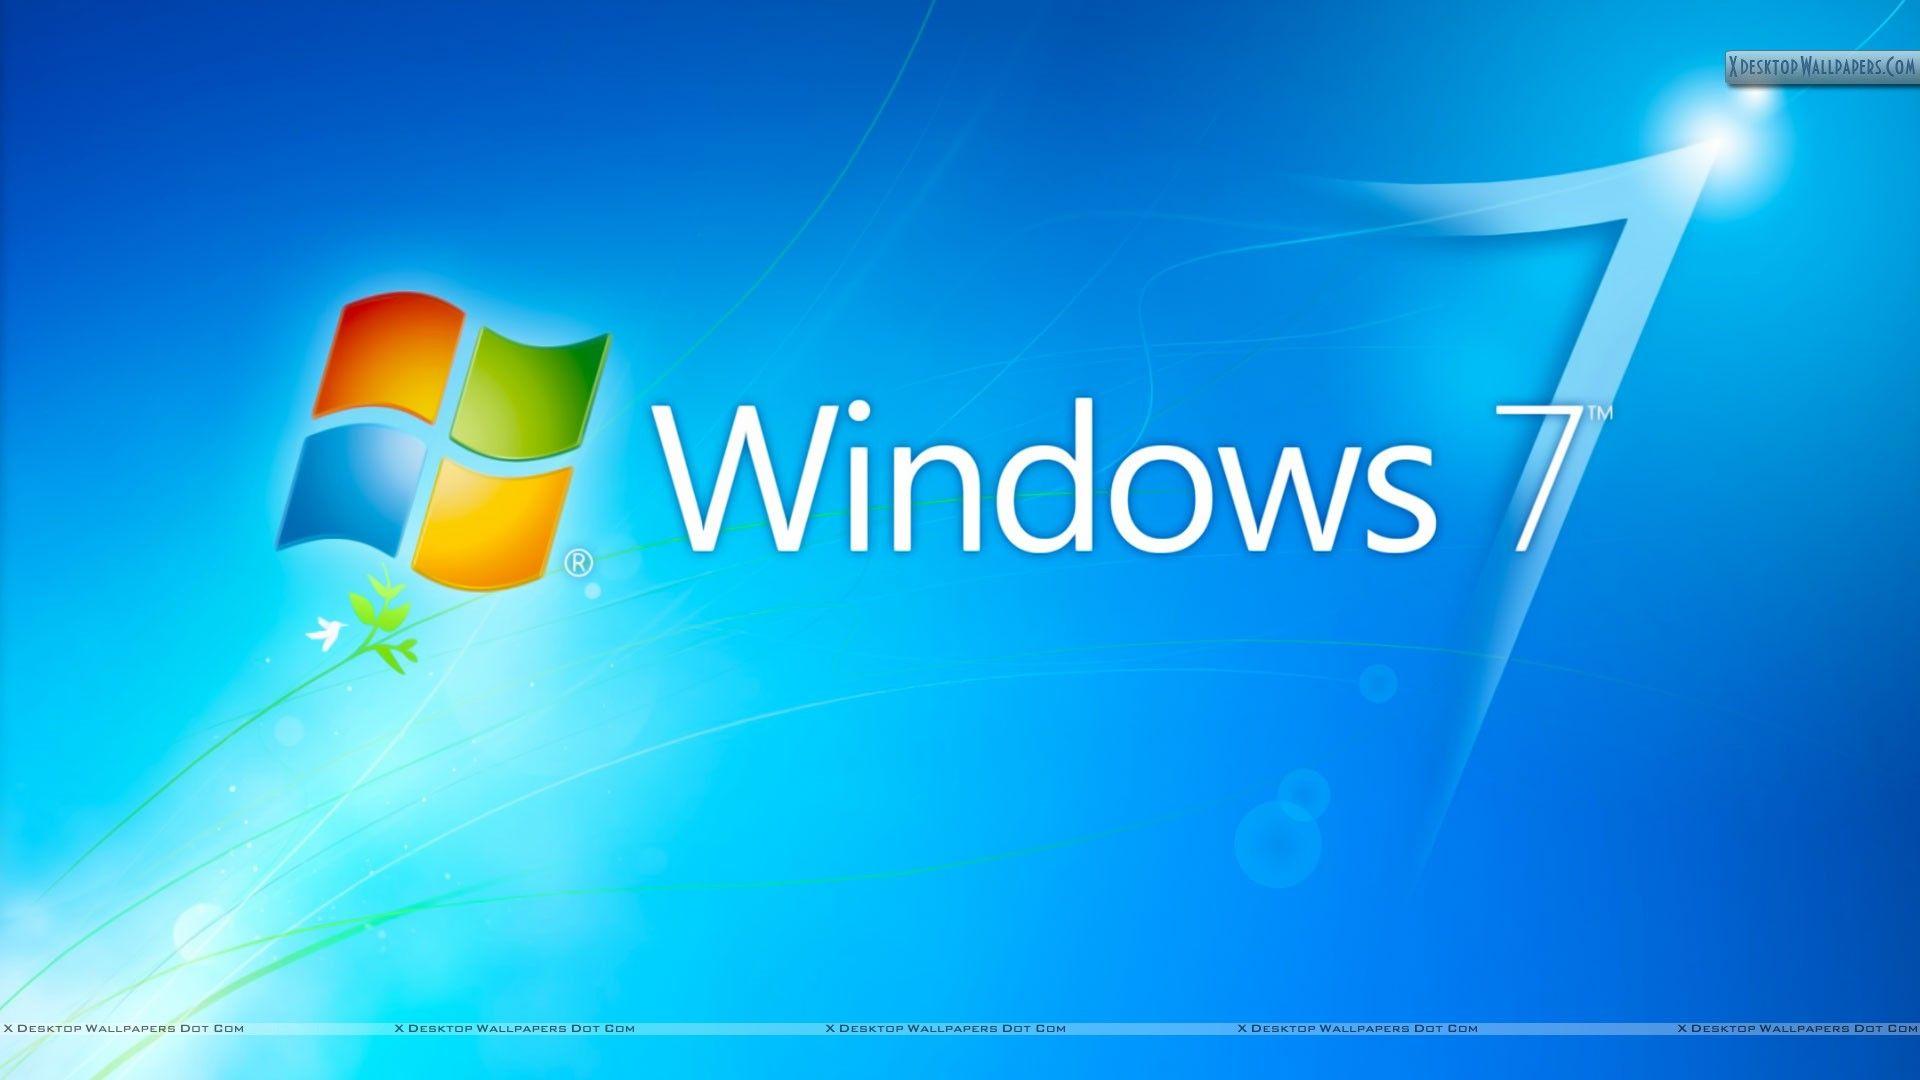 Windows 7 Wallpaper, Photo & Image in HD